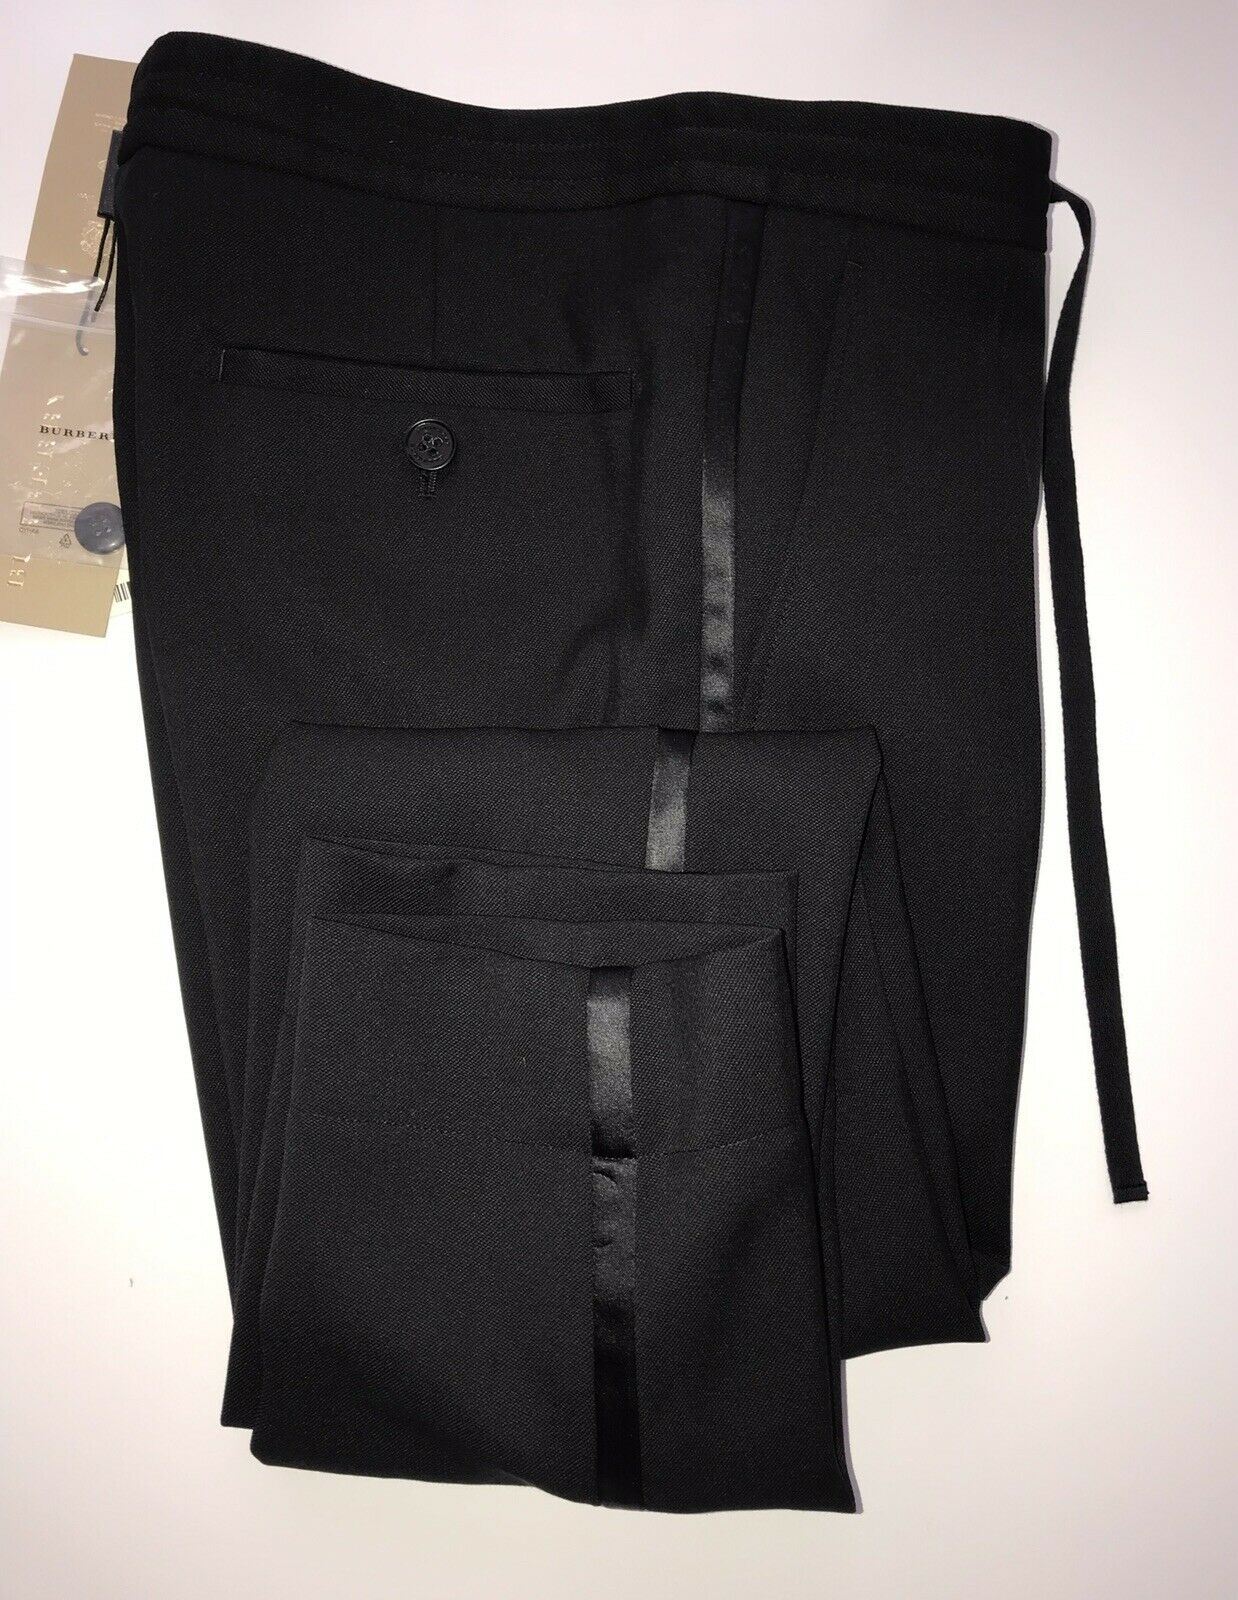 NWT 550 Burberry London Women's Wool Casual Black Pants Size 6 US (40 EU)